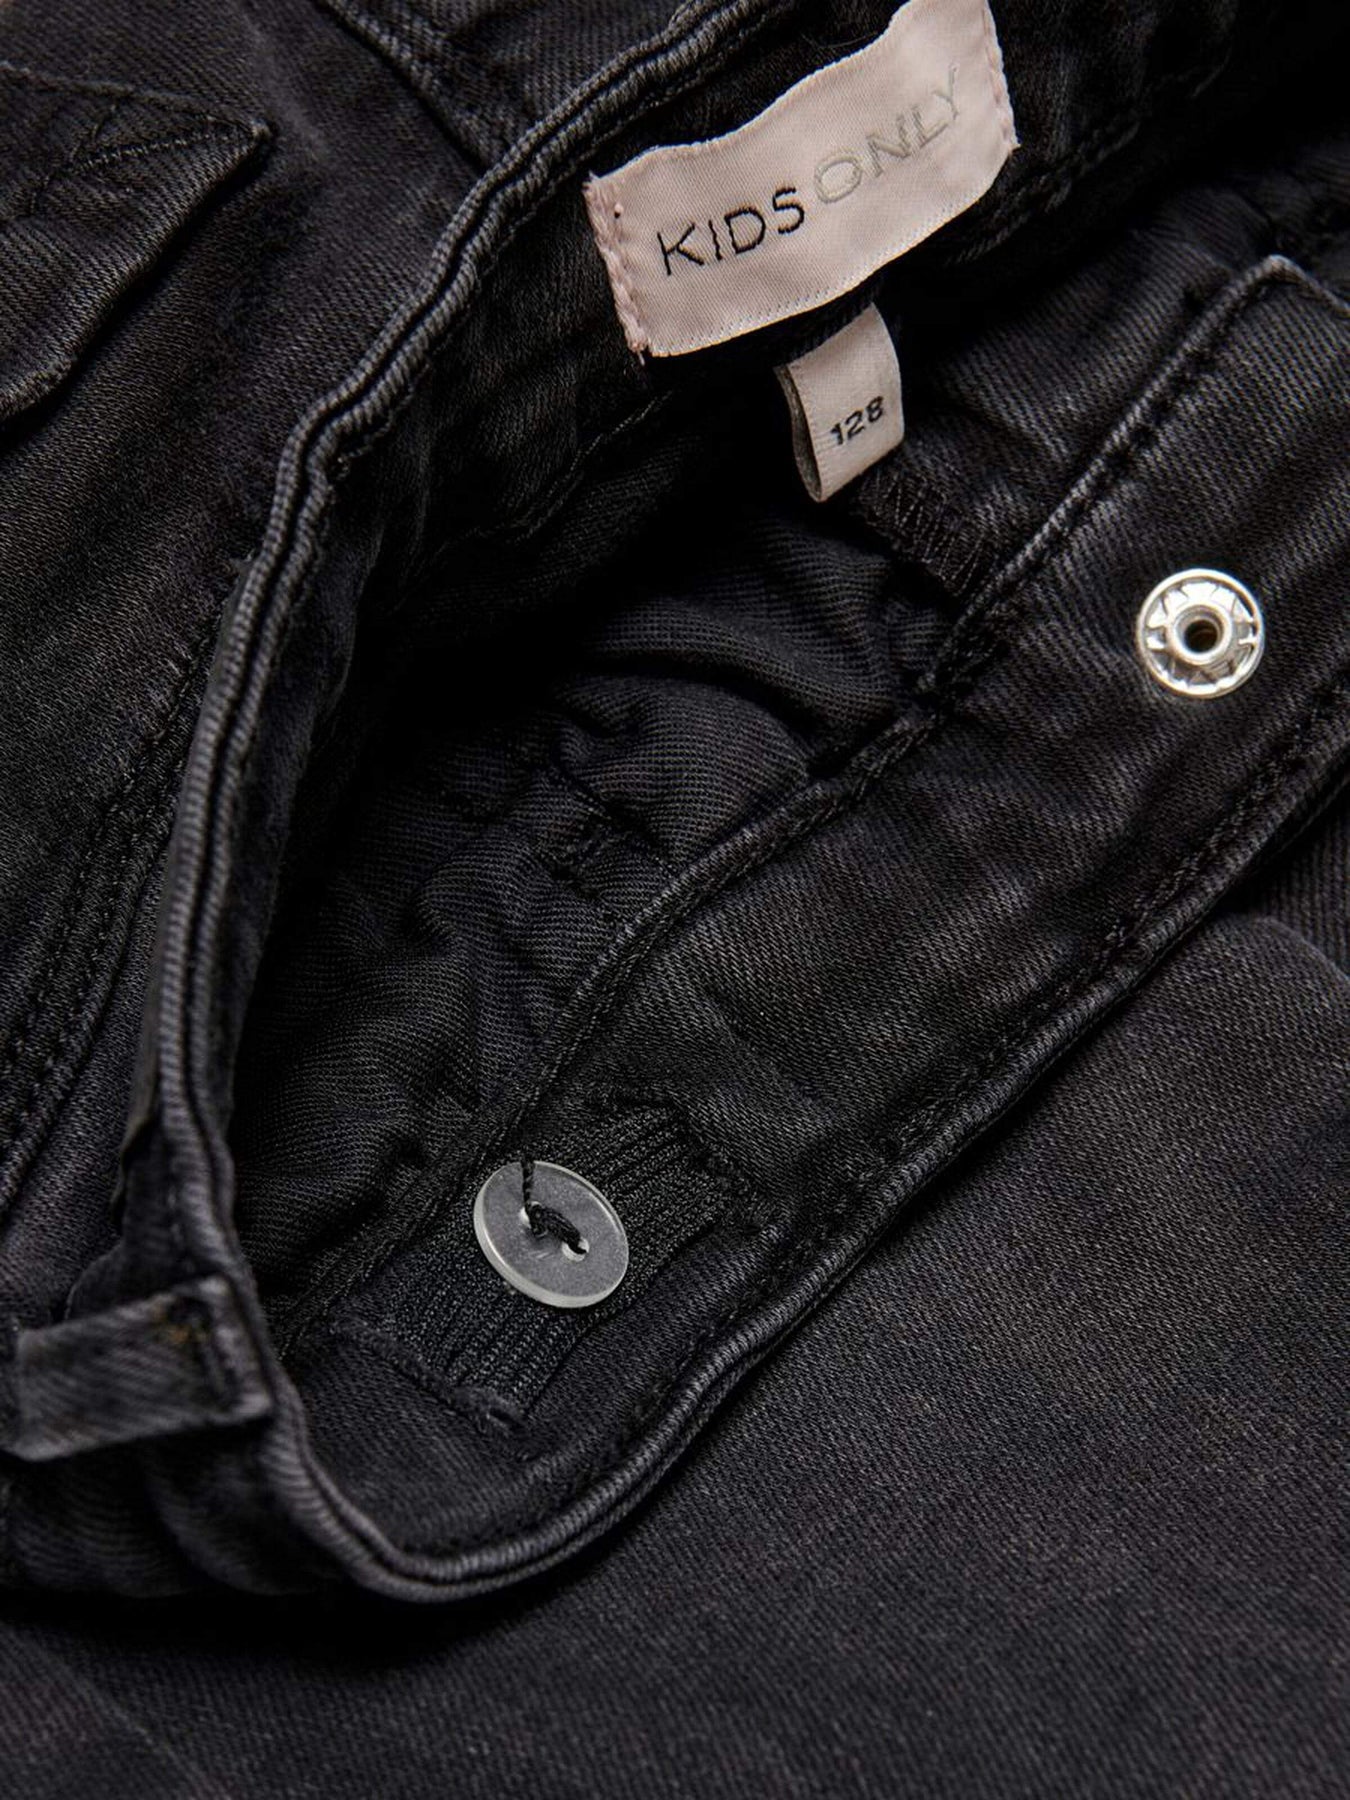 Black Jeans - KONRACHEL Fit – ONLY Kids Skinny